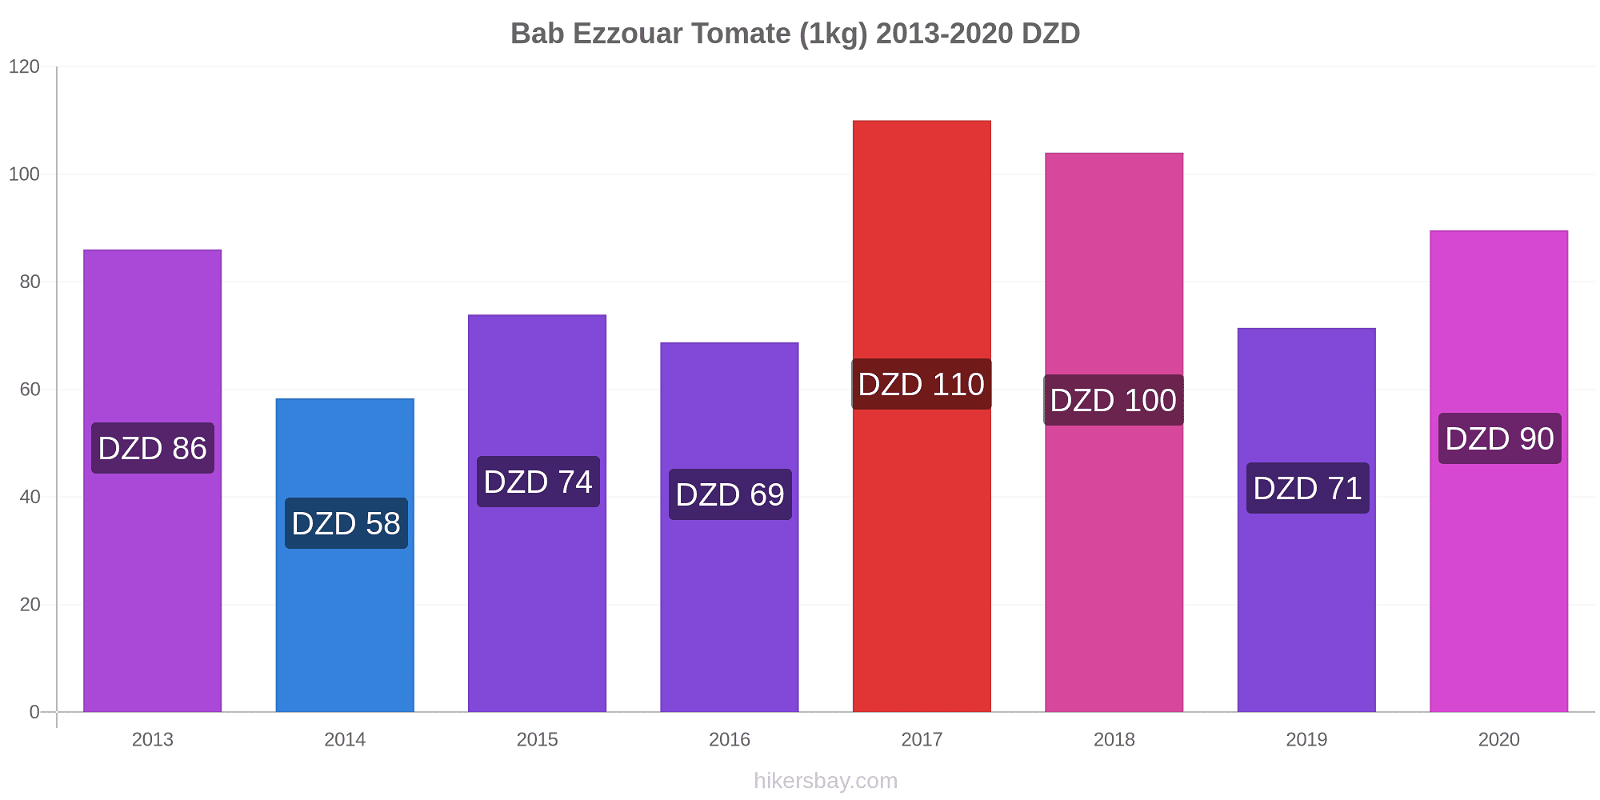 Bab Ezzouar modificări de preț Tomate (1kg) hikersbay.com